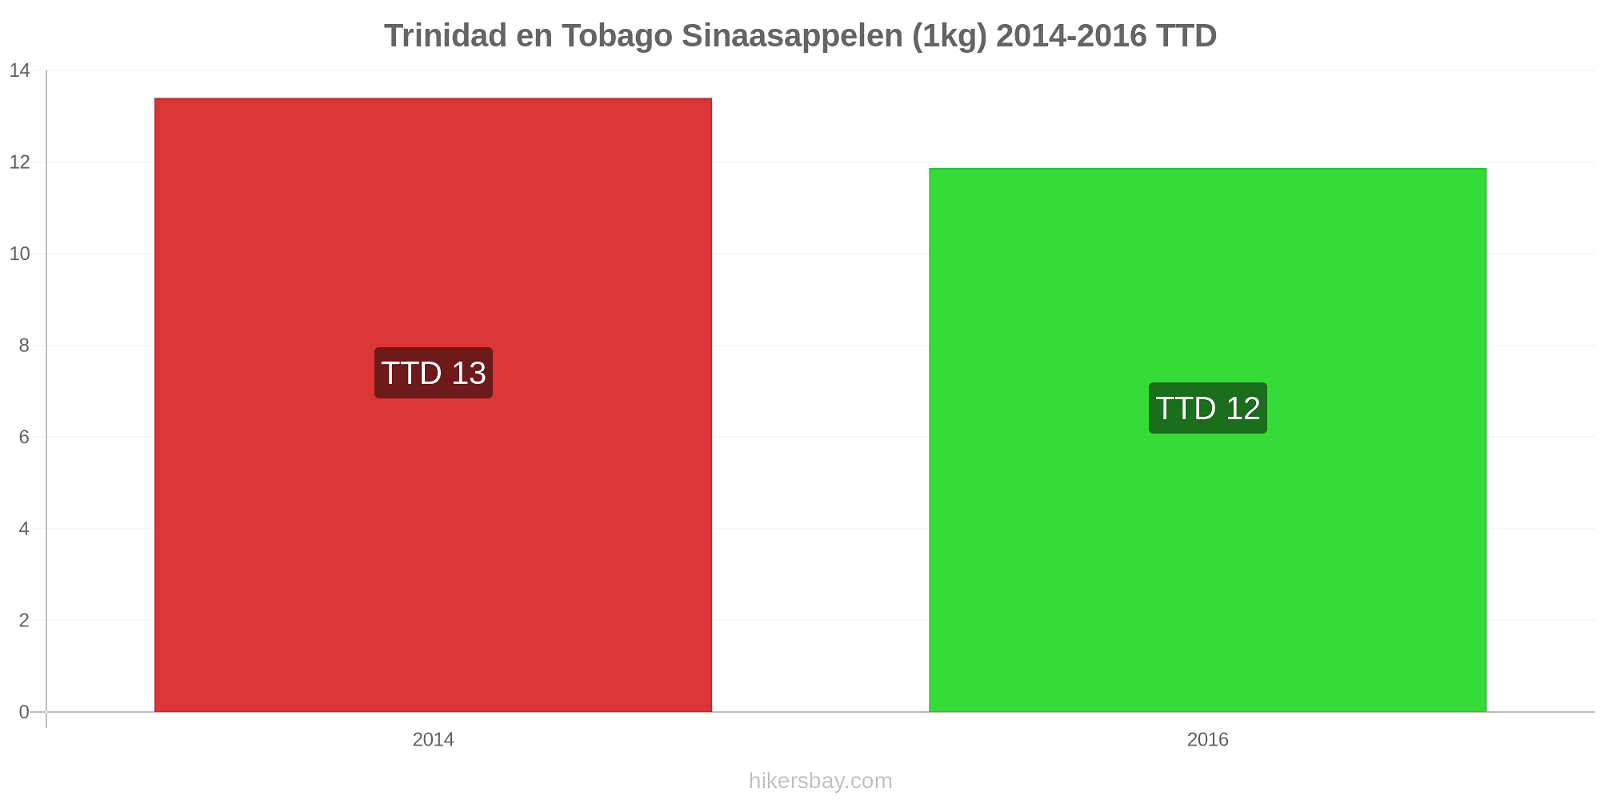 Trinidad en Tobago prijswijzigingen Sinaasappels (1kg) hikersbay.com